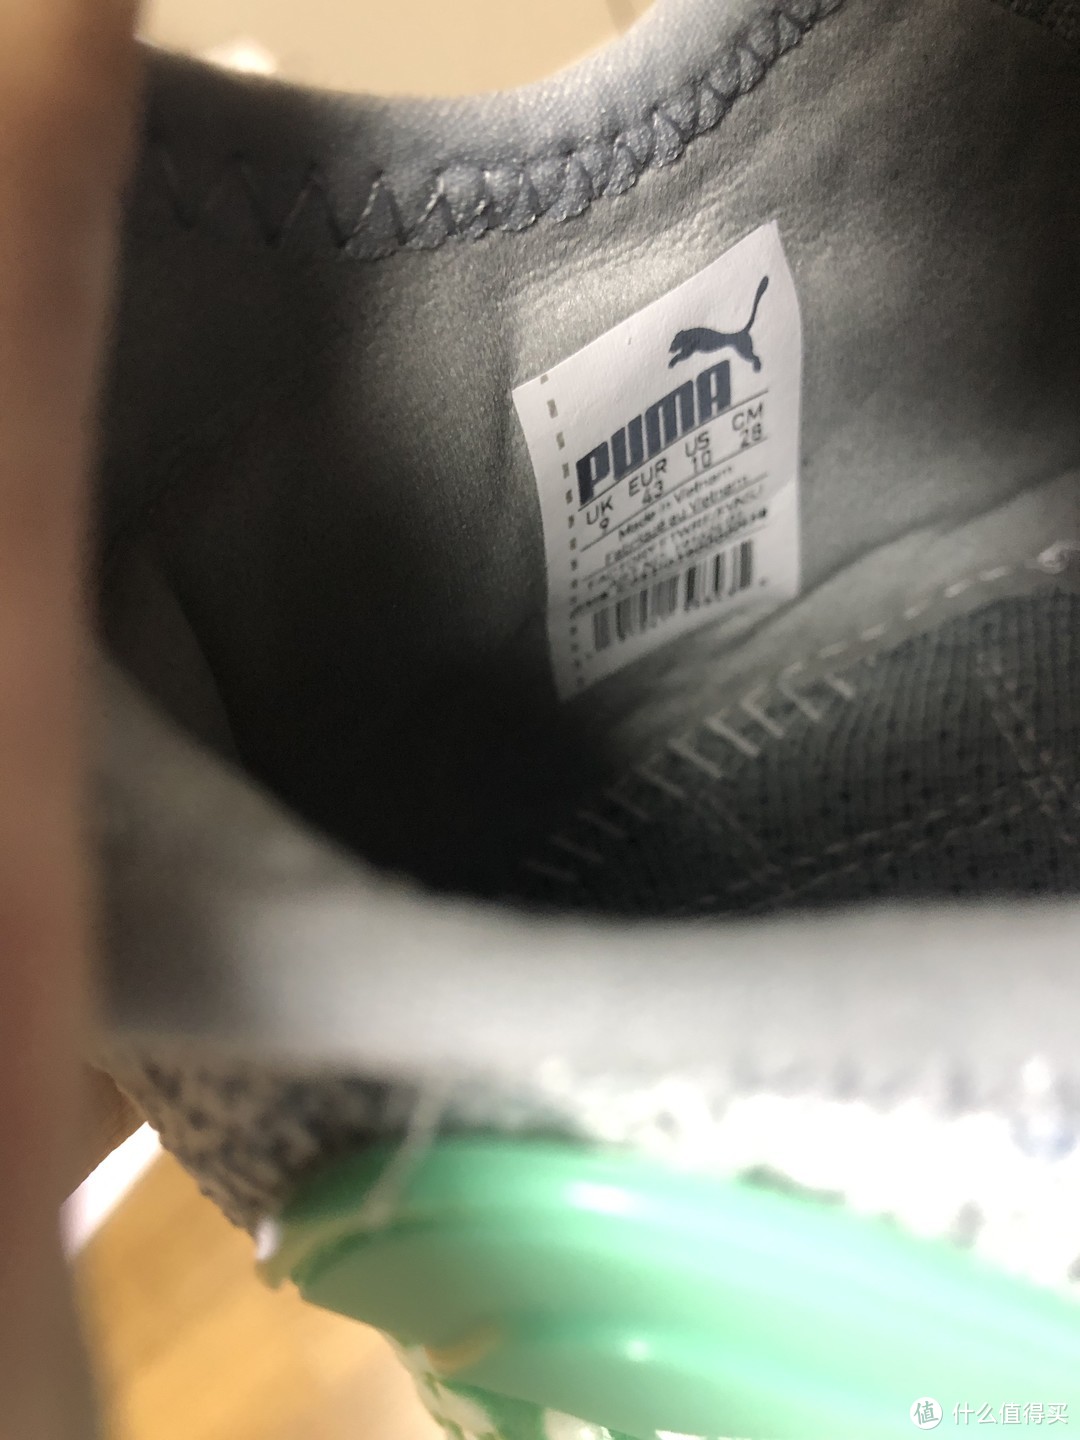 Nike有涡轮增压，Puma有混合动力—PUMA 彪马 Hybrid Rocket Netfit 跑鞋开箱评测